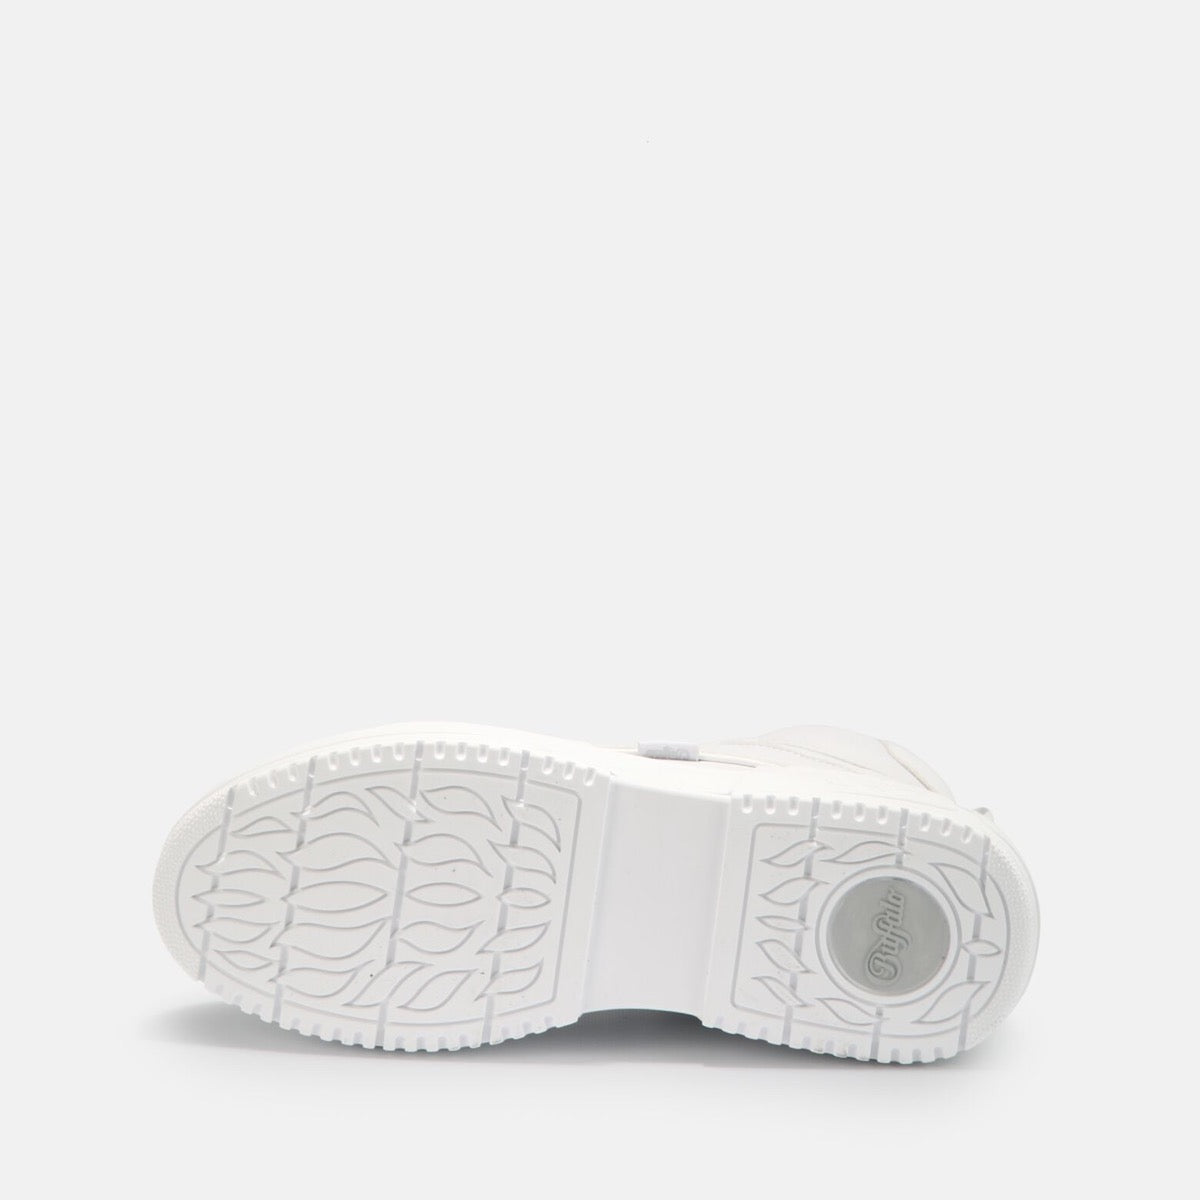 Scarpe BUFFALO Sneakers Alte Vegan linea RSE MID colore Bianco